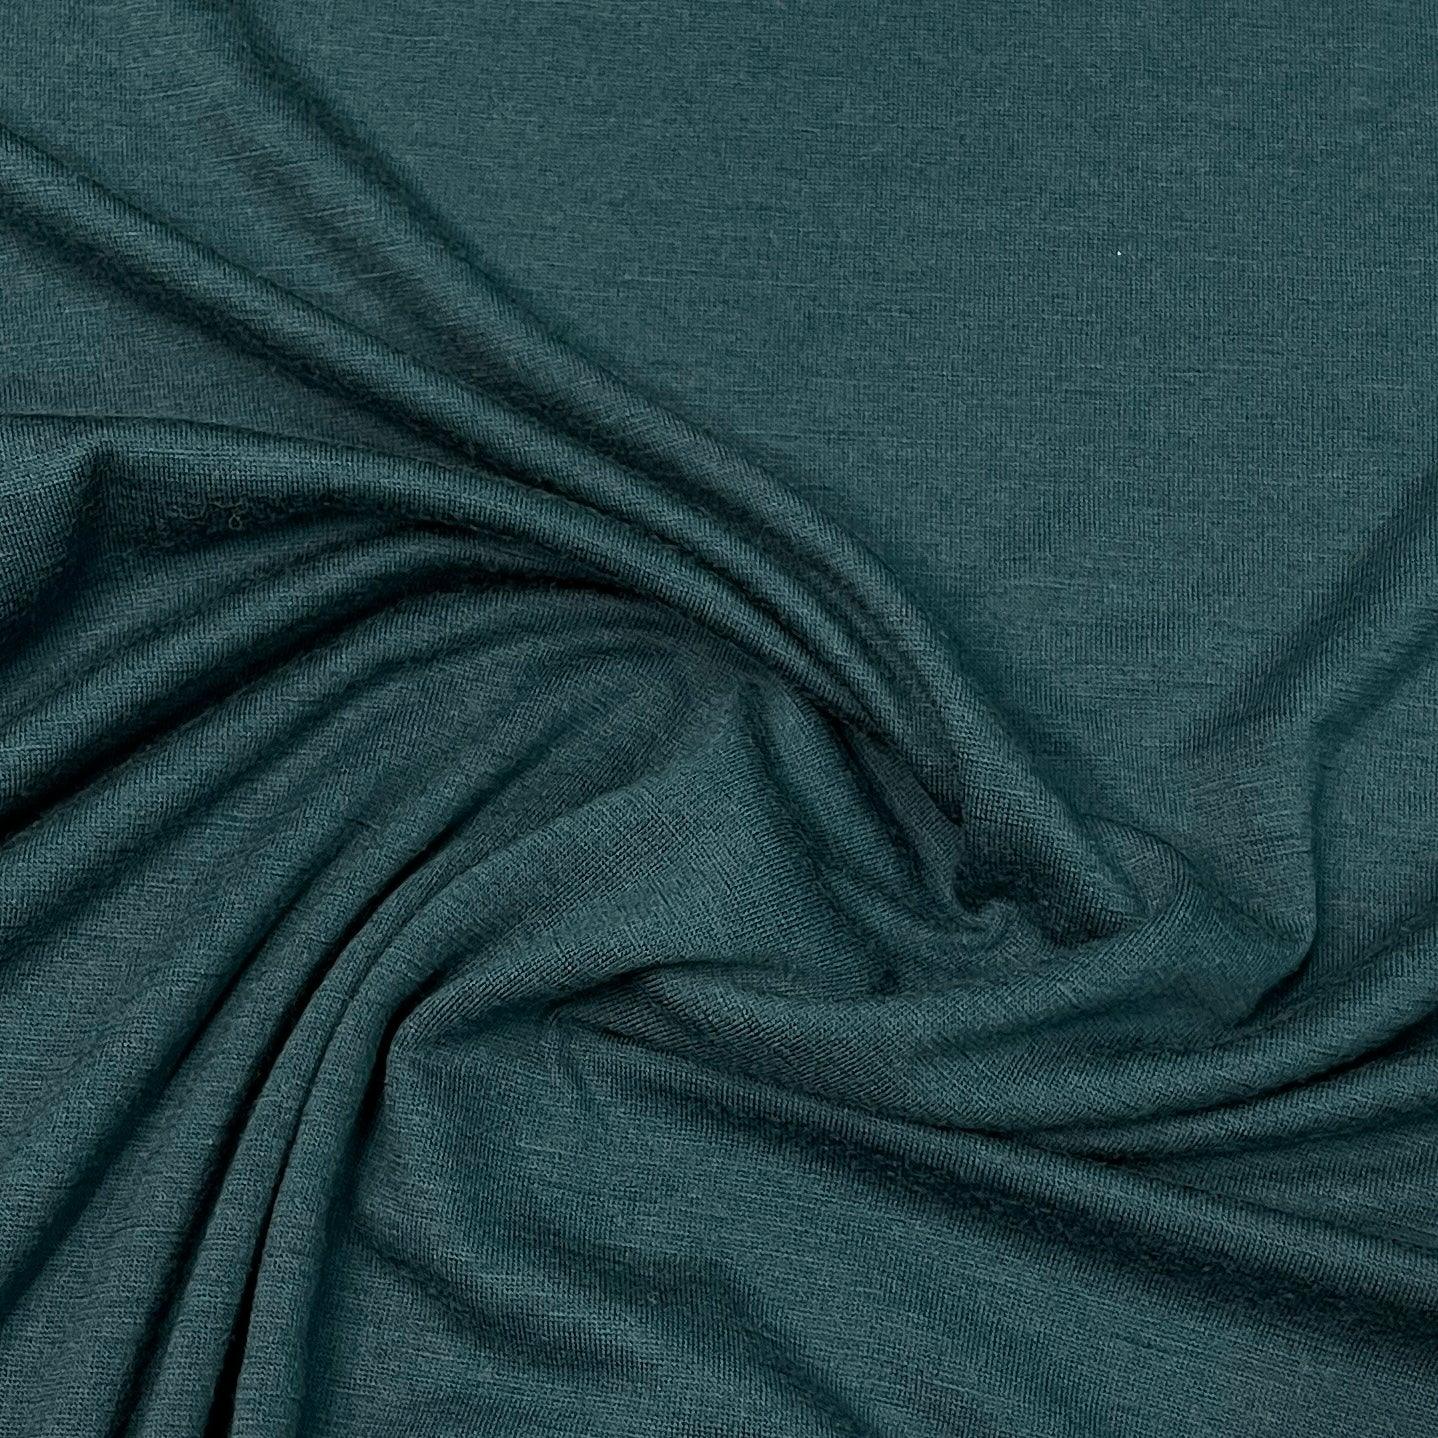 Teal Tide 100% Merino Wool Jersey Fabric - 200 GSM by Telio - Nature's Fabrics